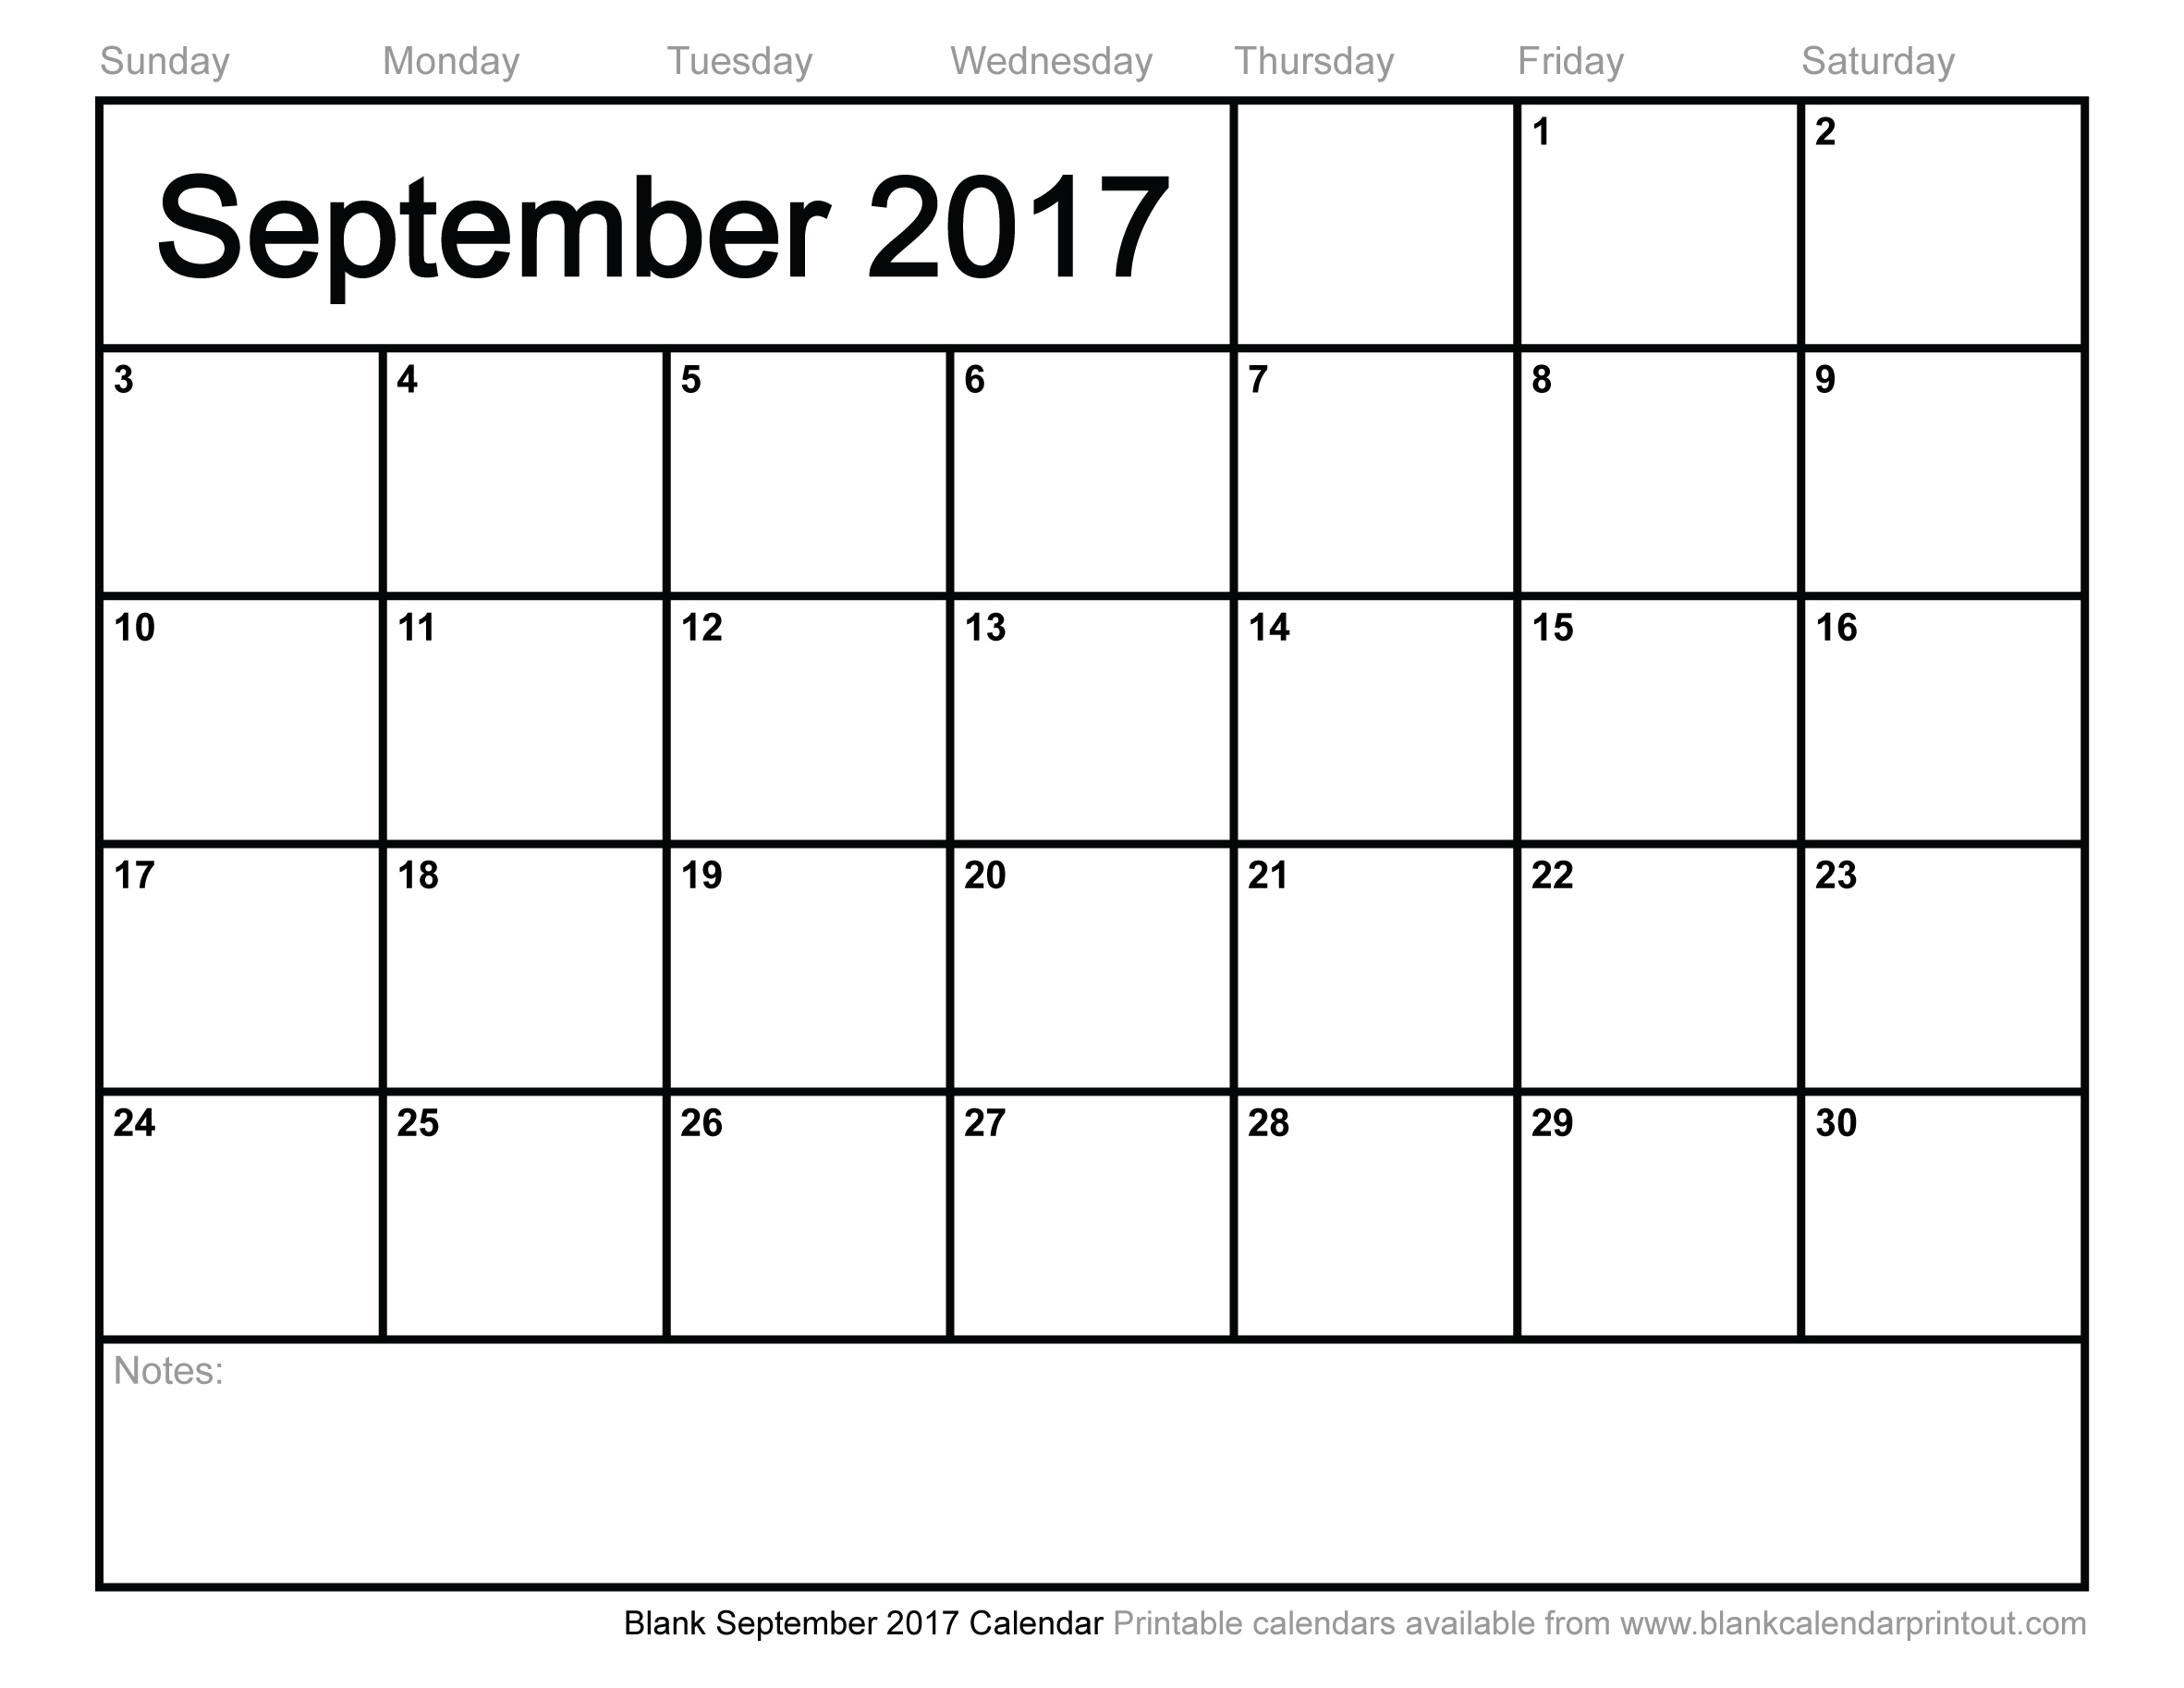 Blank September 2017 Calendar to Print